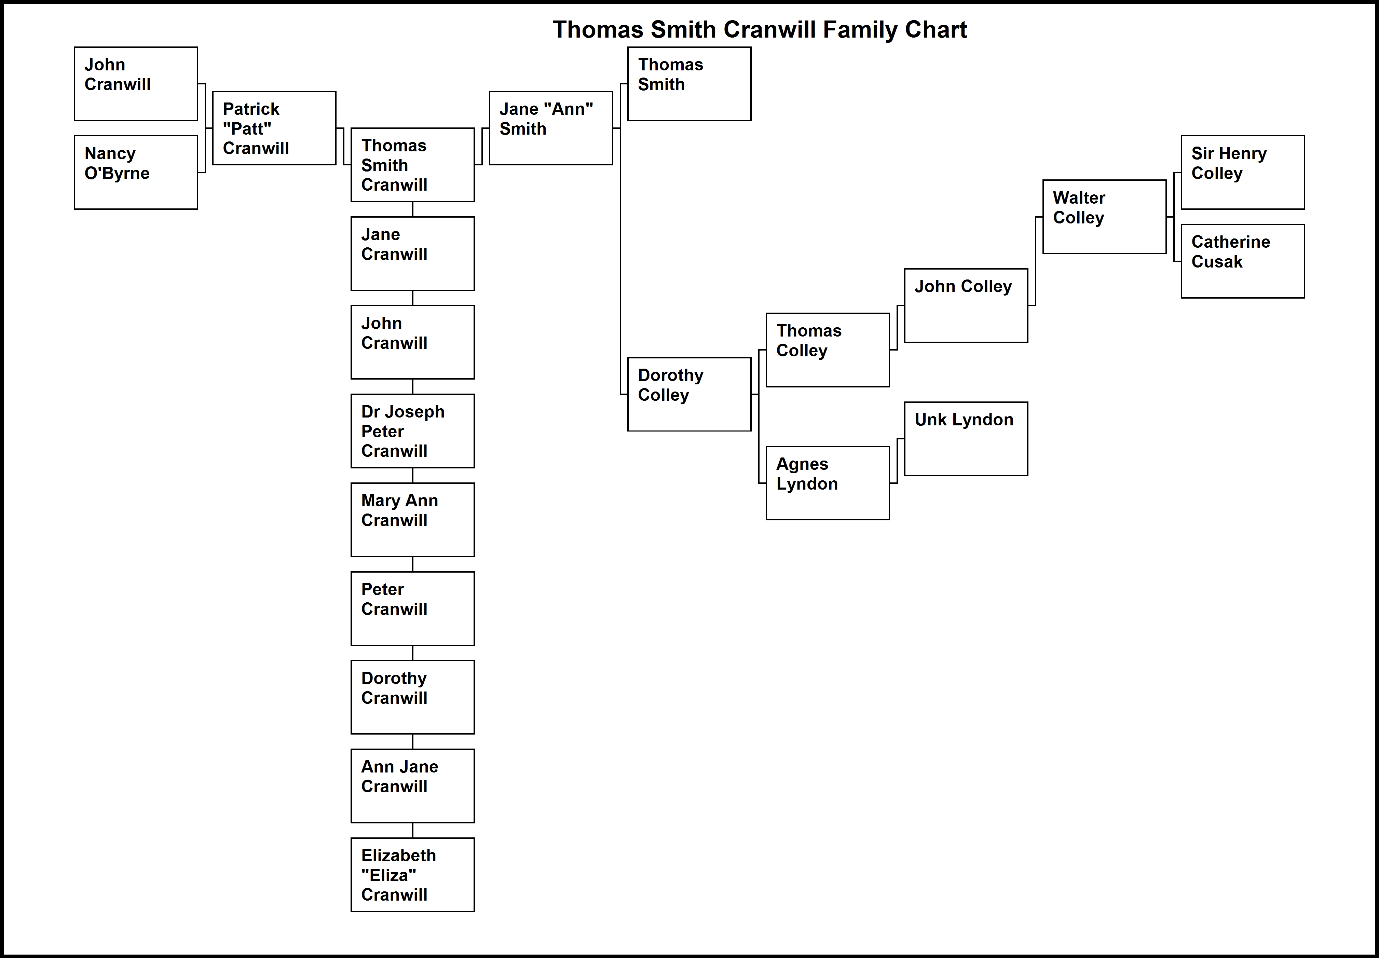 C:\Users\Virginia Rundle\Dropbox\VR\Ancestry Stuff\Kilpatrick\Thomas Smith Cranwill Family Chart.bmp